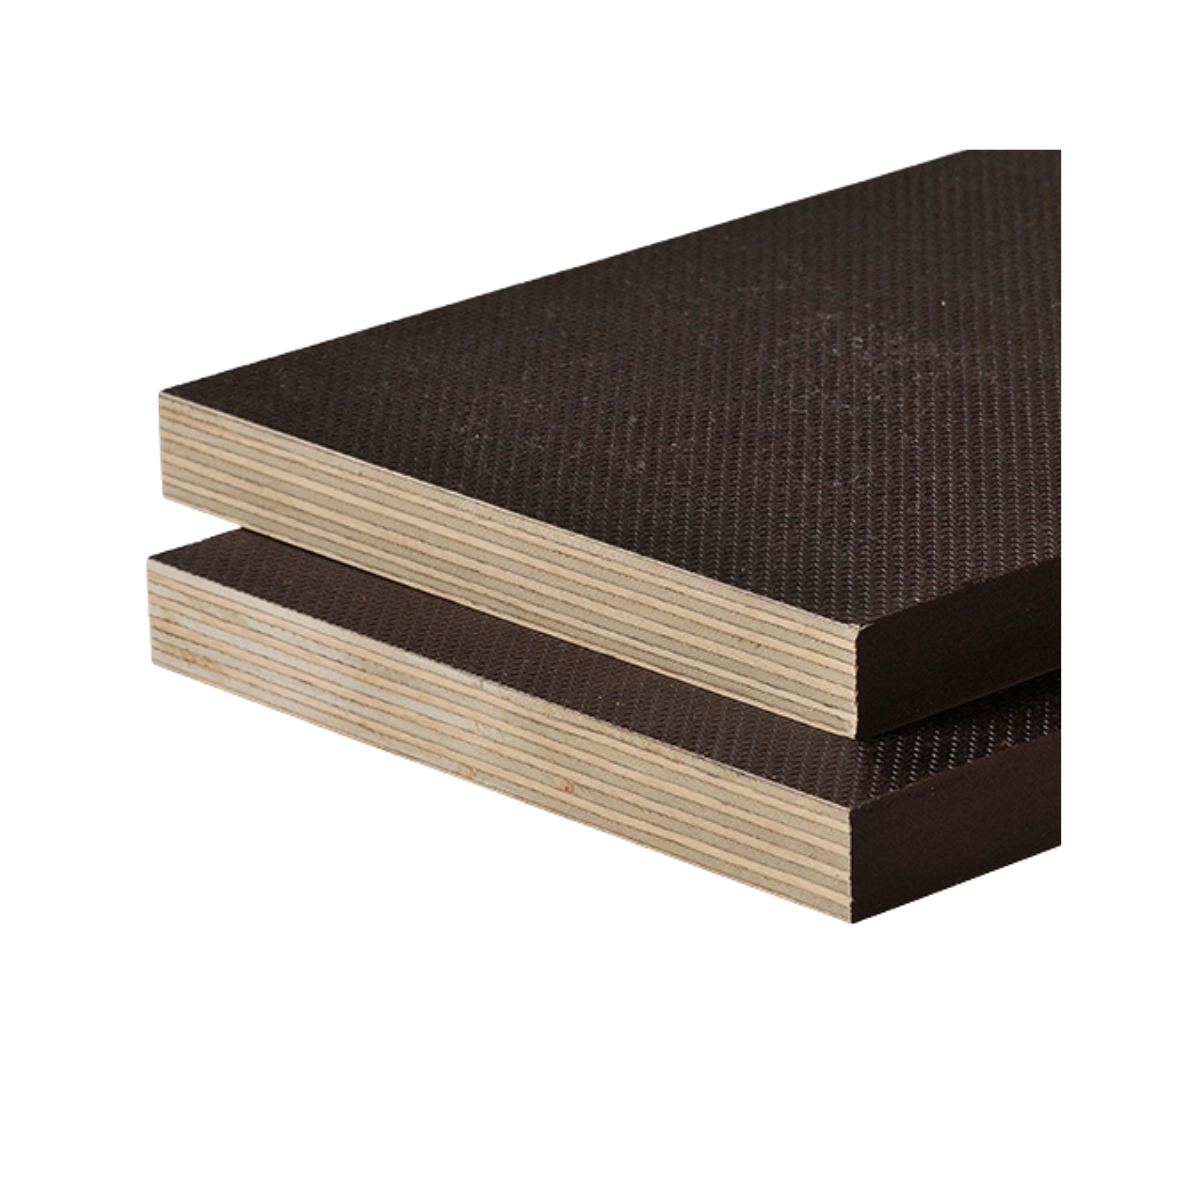 Antiskid playwood - Anti-slip TEGO formwork plywood 27 mm thickness 1250 x 2500 mm class A, https:maxbau.ro